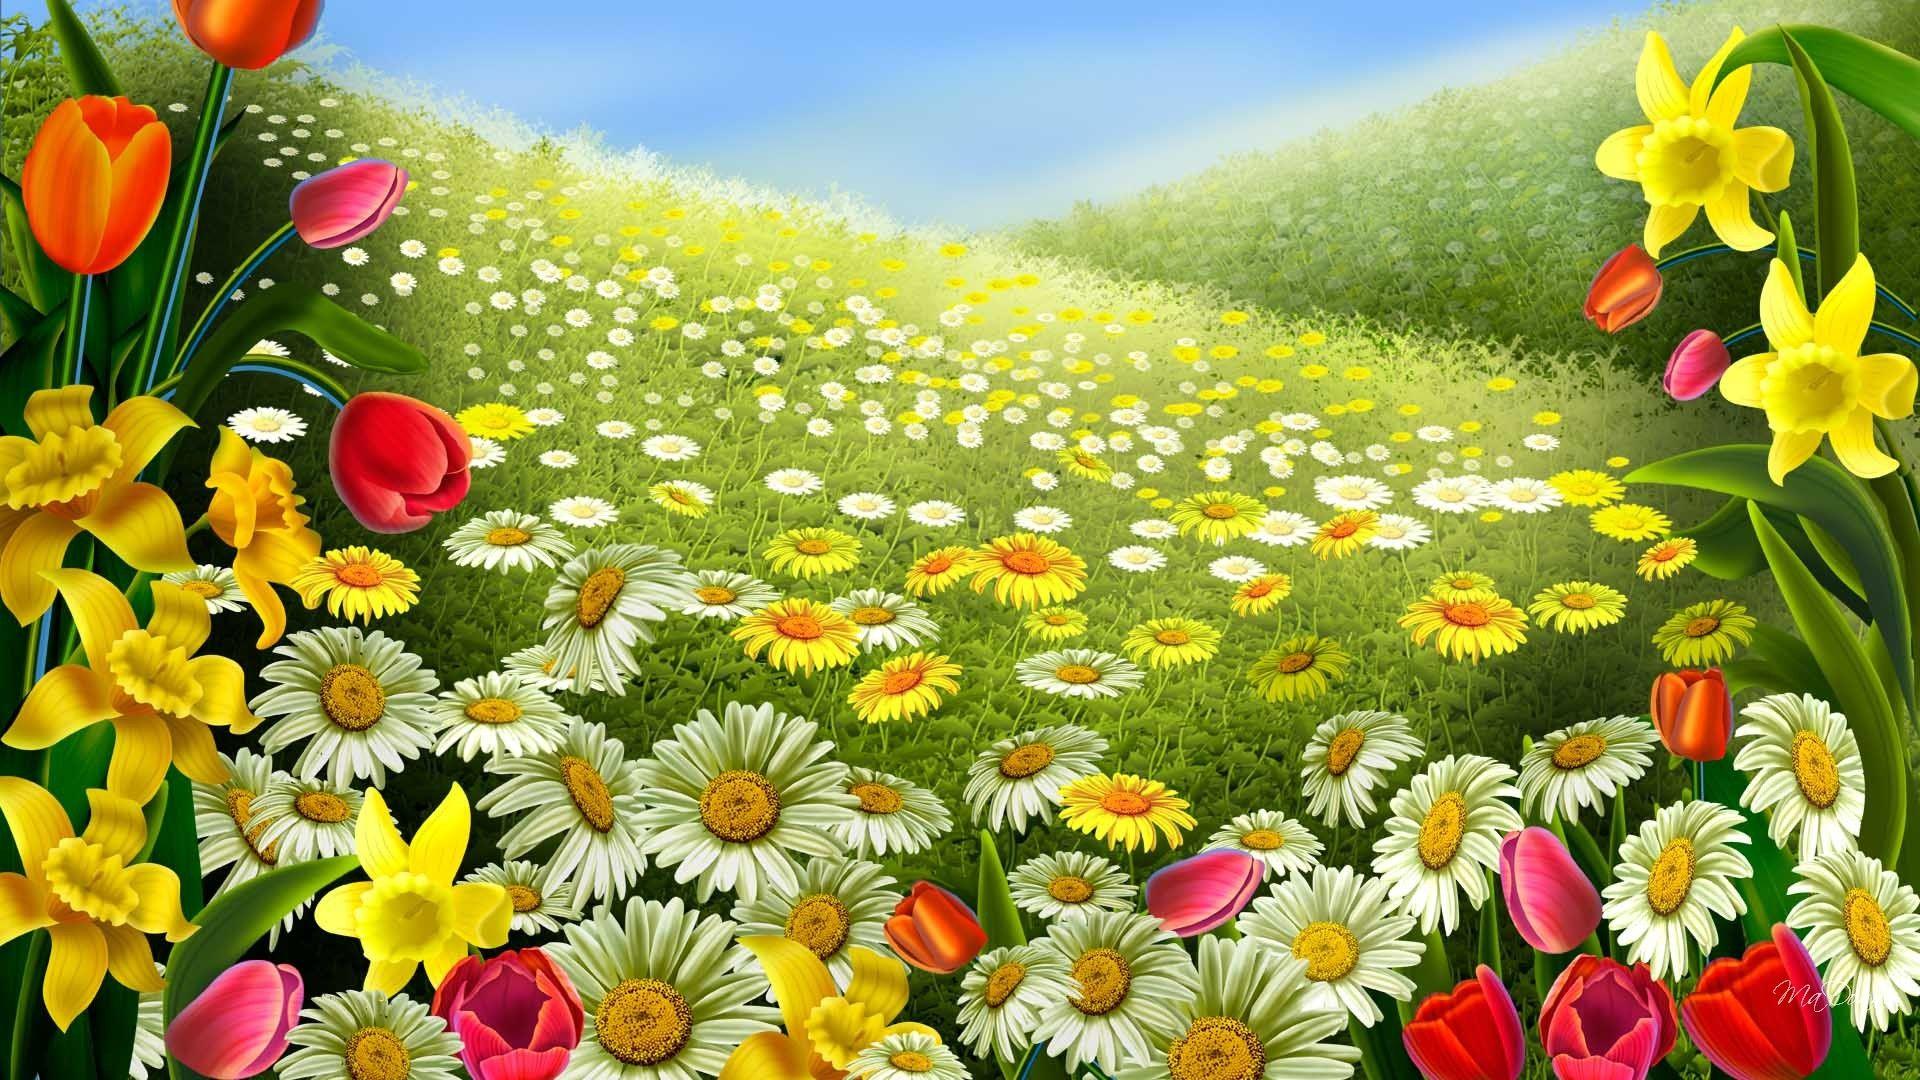 Spring Flowers wallpaper. Beautiful flowers image, Beautiful flowers wallpaper, Flower image wallpaper